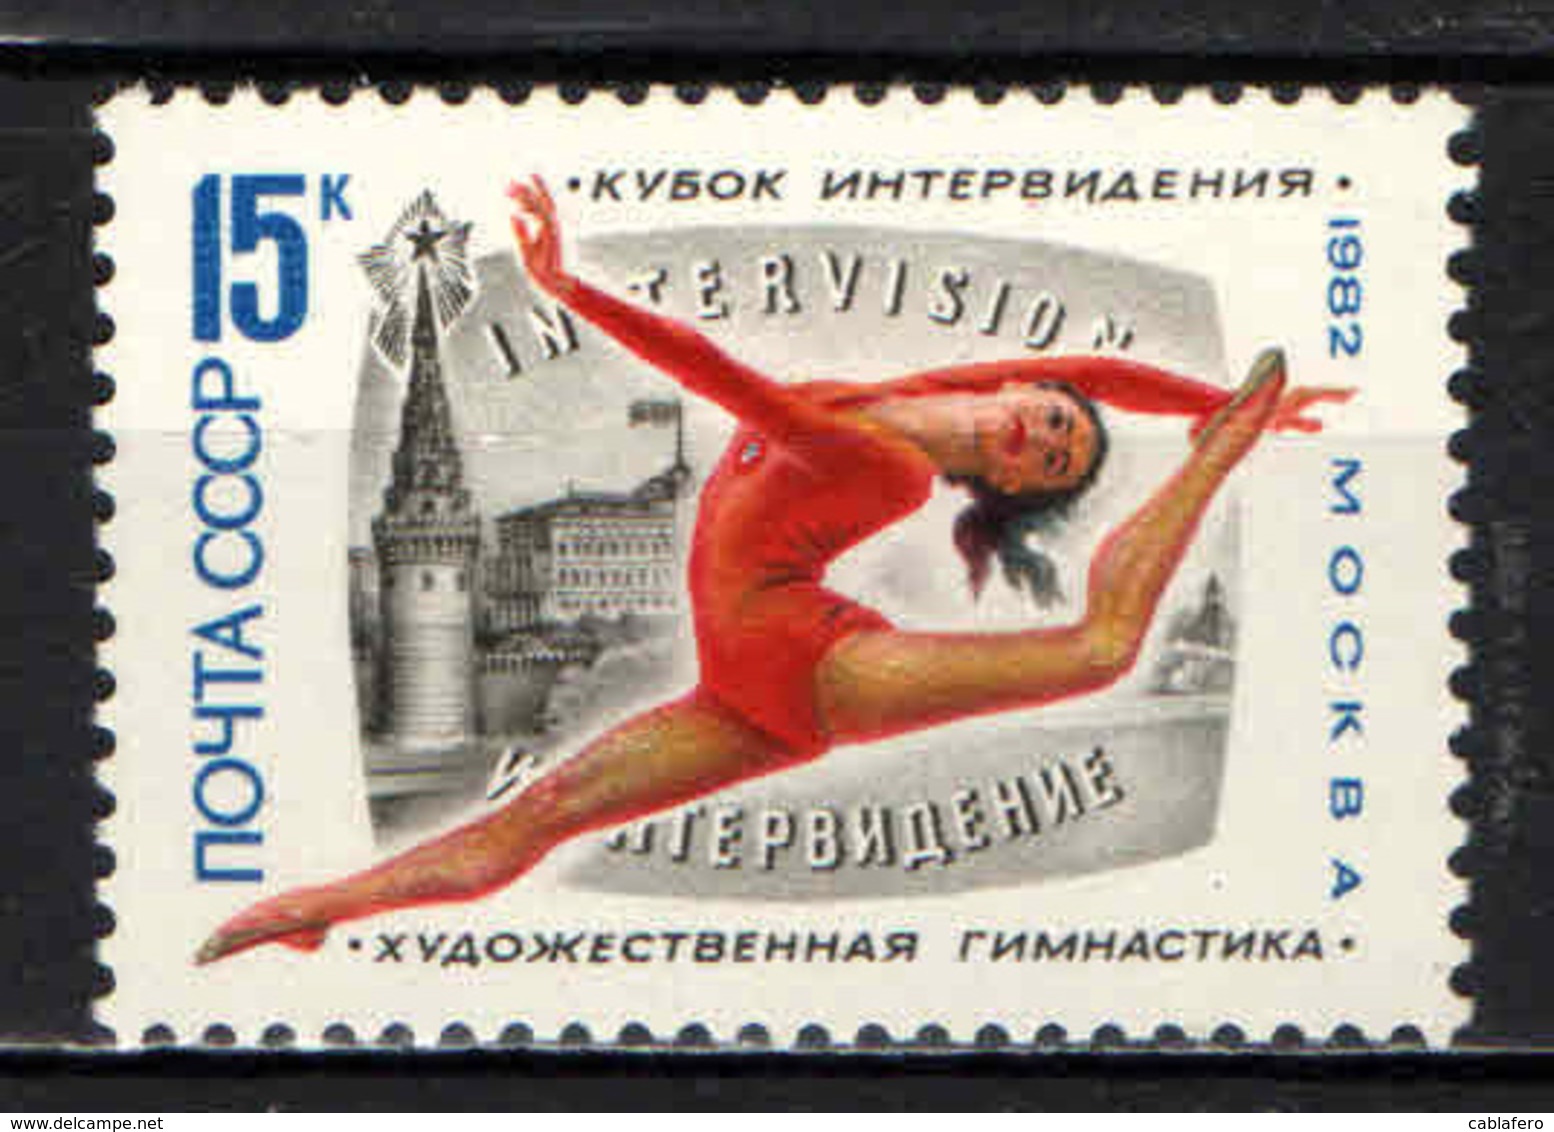 URSS - 1982 - Intervision Gymnastics Contest - MNH - Nuovi